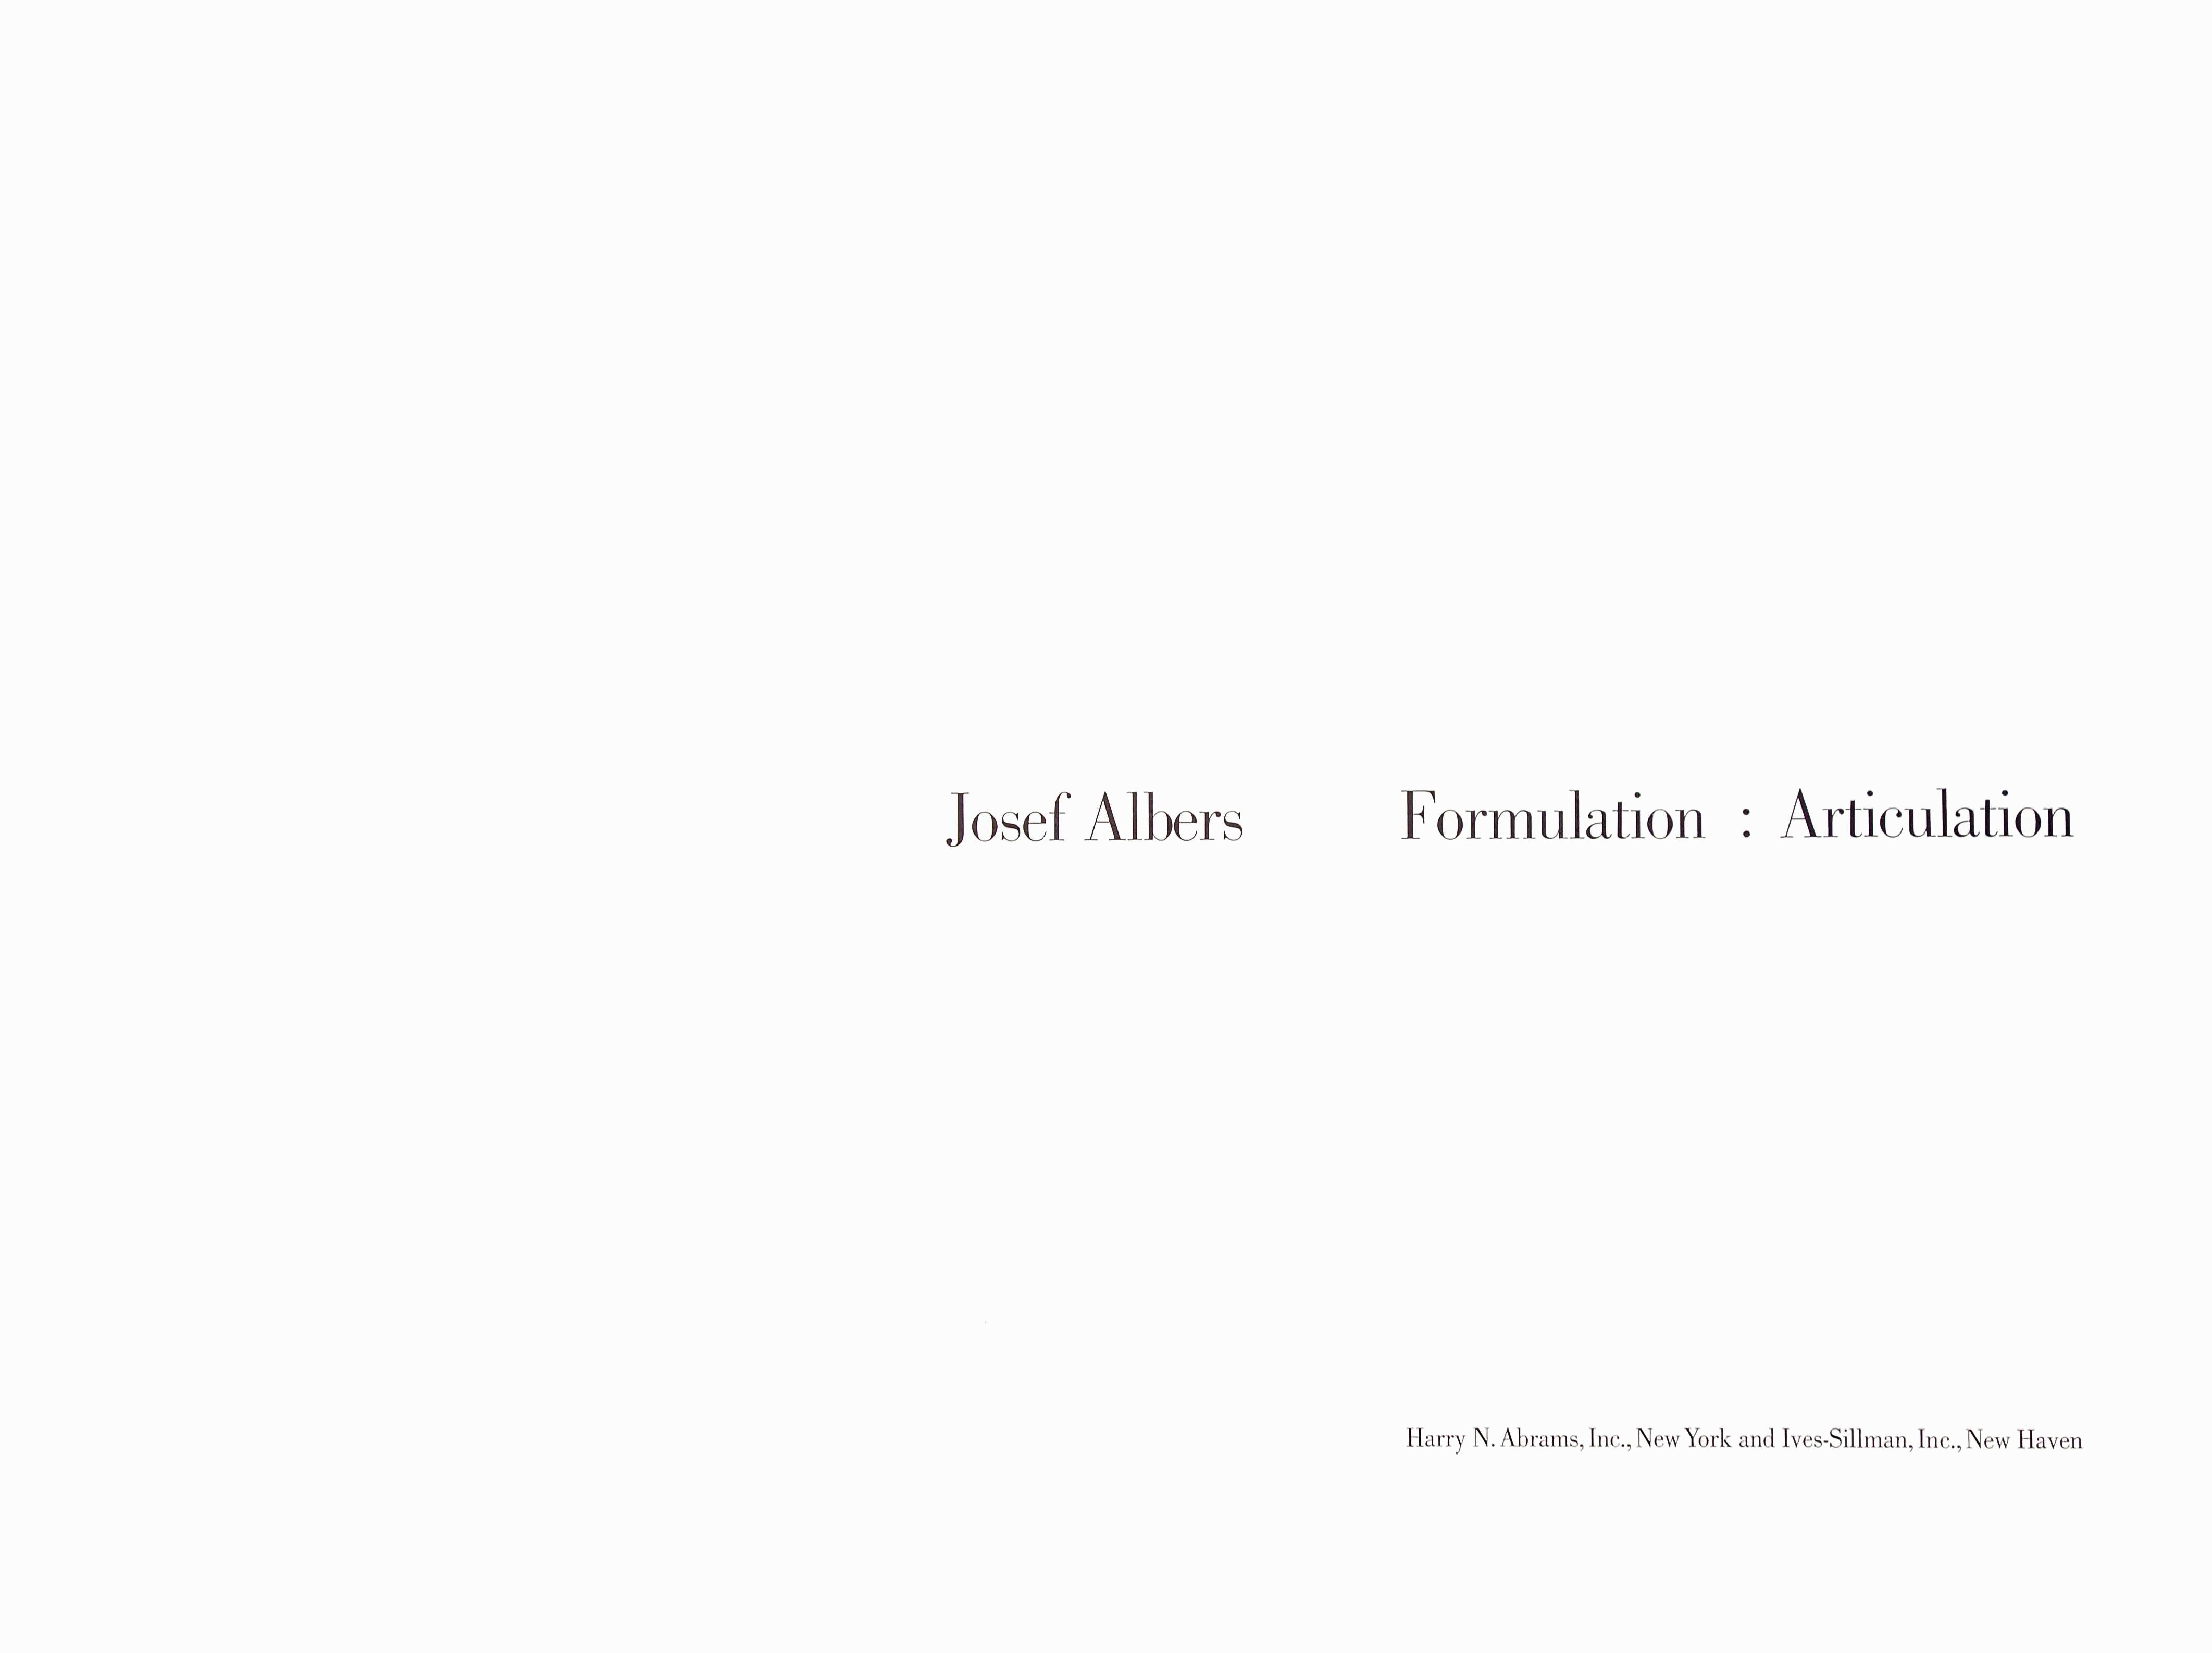 Formulation : Articulation, Portfolio II, Folder 28 (A) 